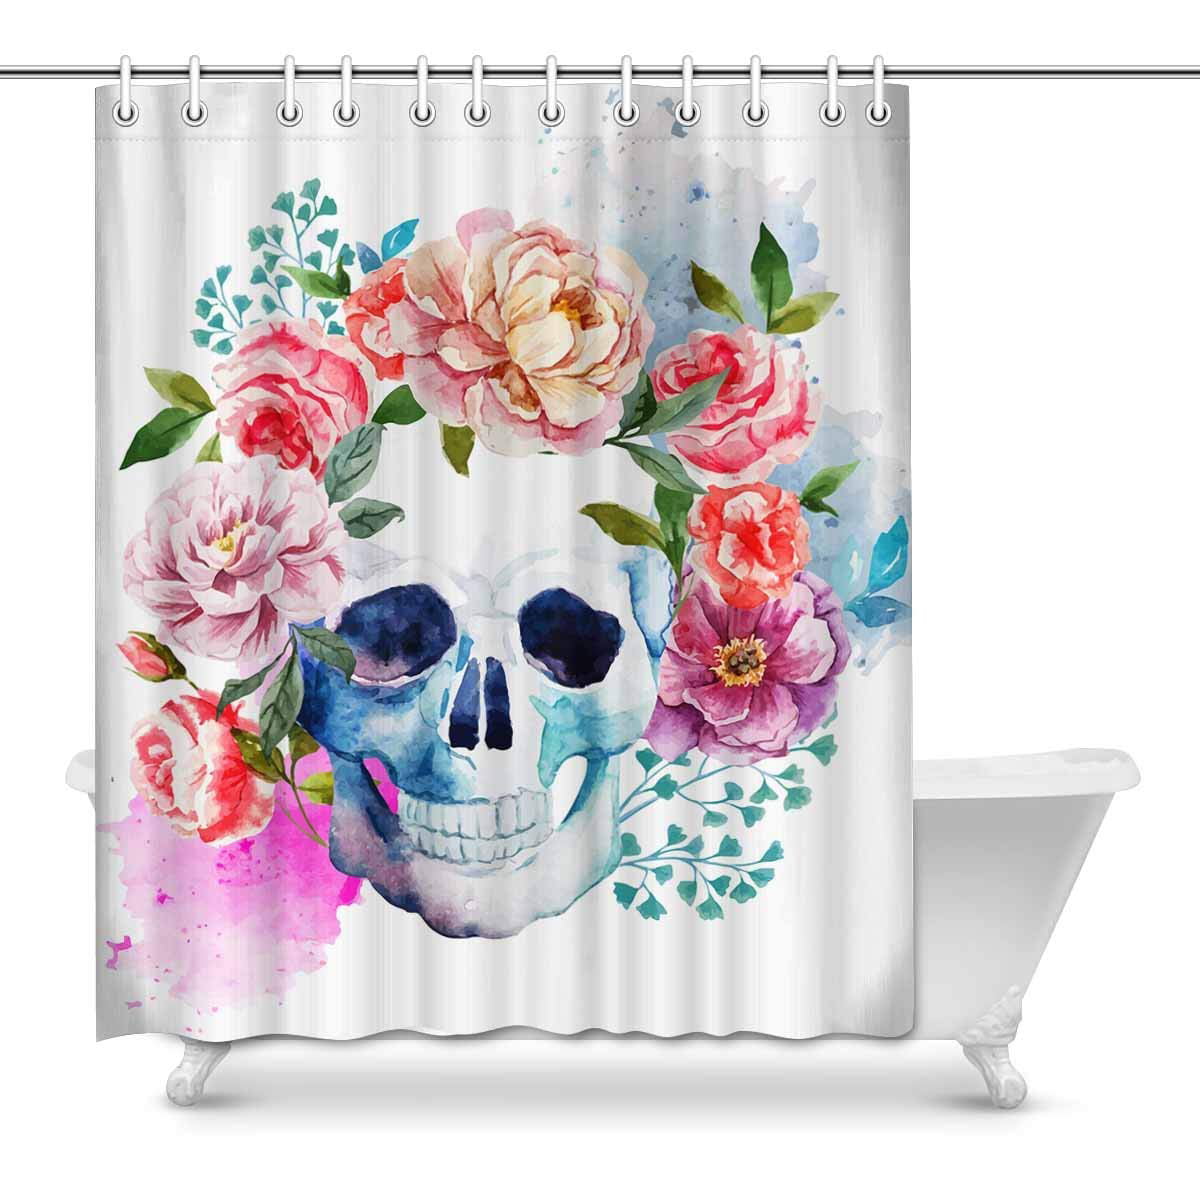 Skull and lighthouse Shower Curtain Bathroom Decor Fabric & 12hooks 71*71inches 